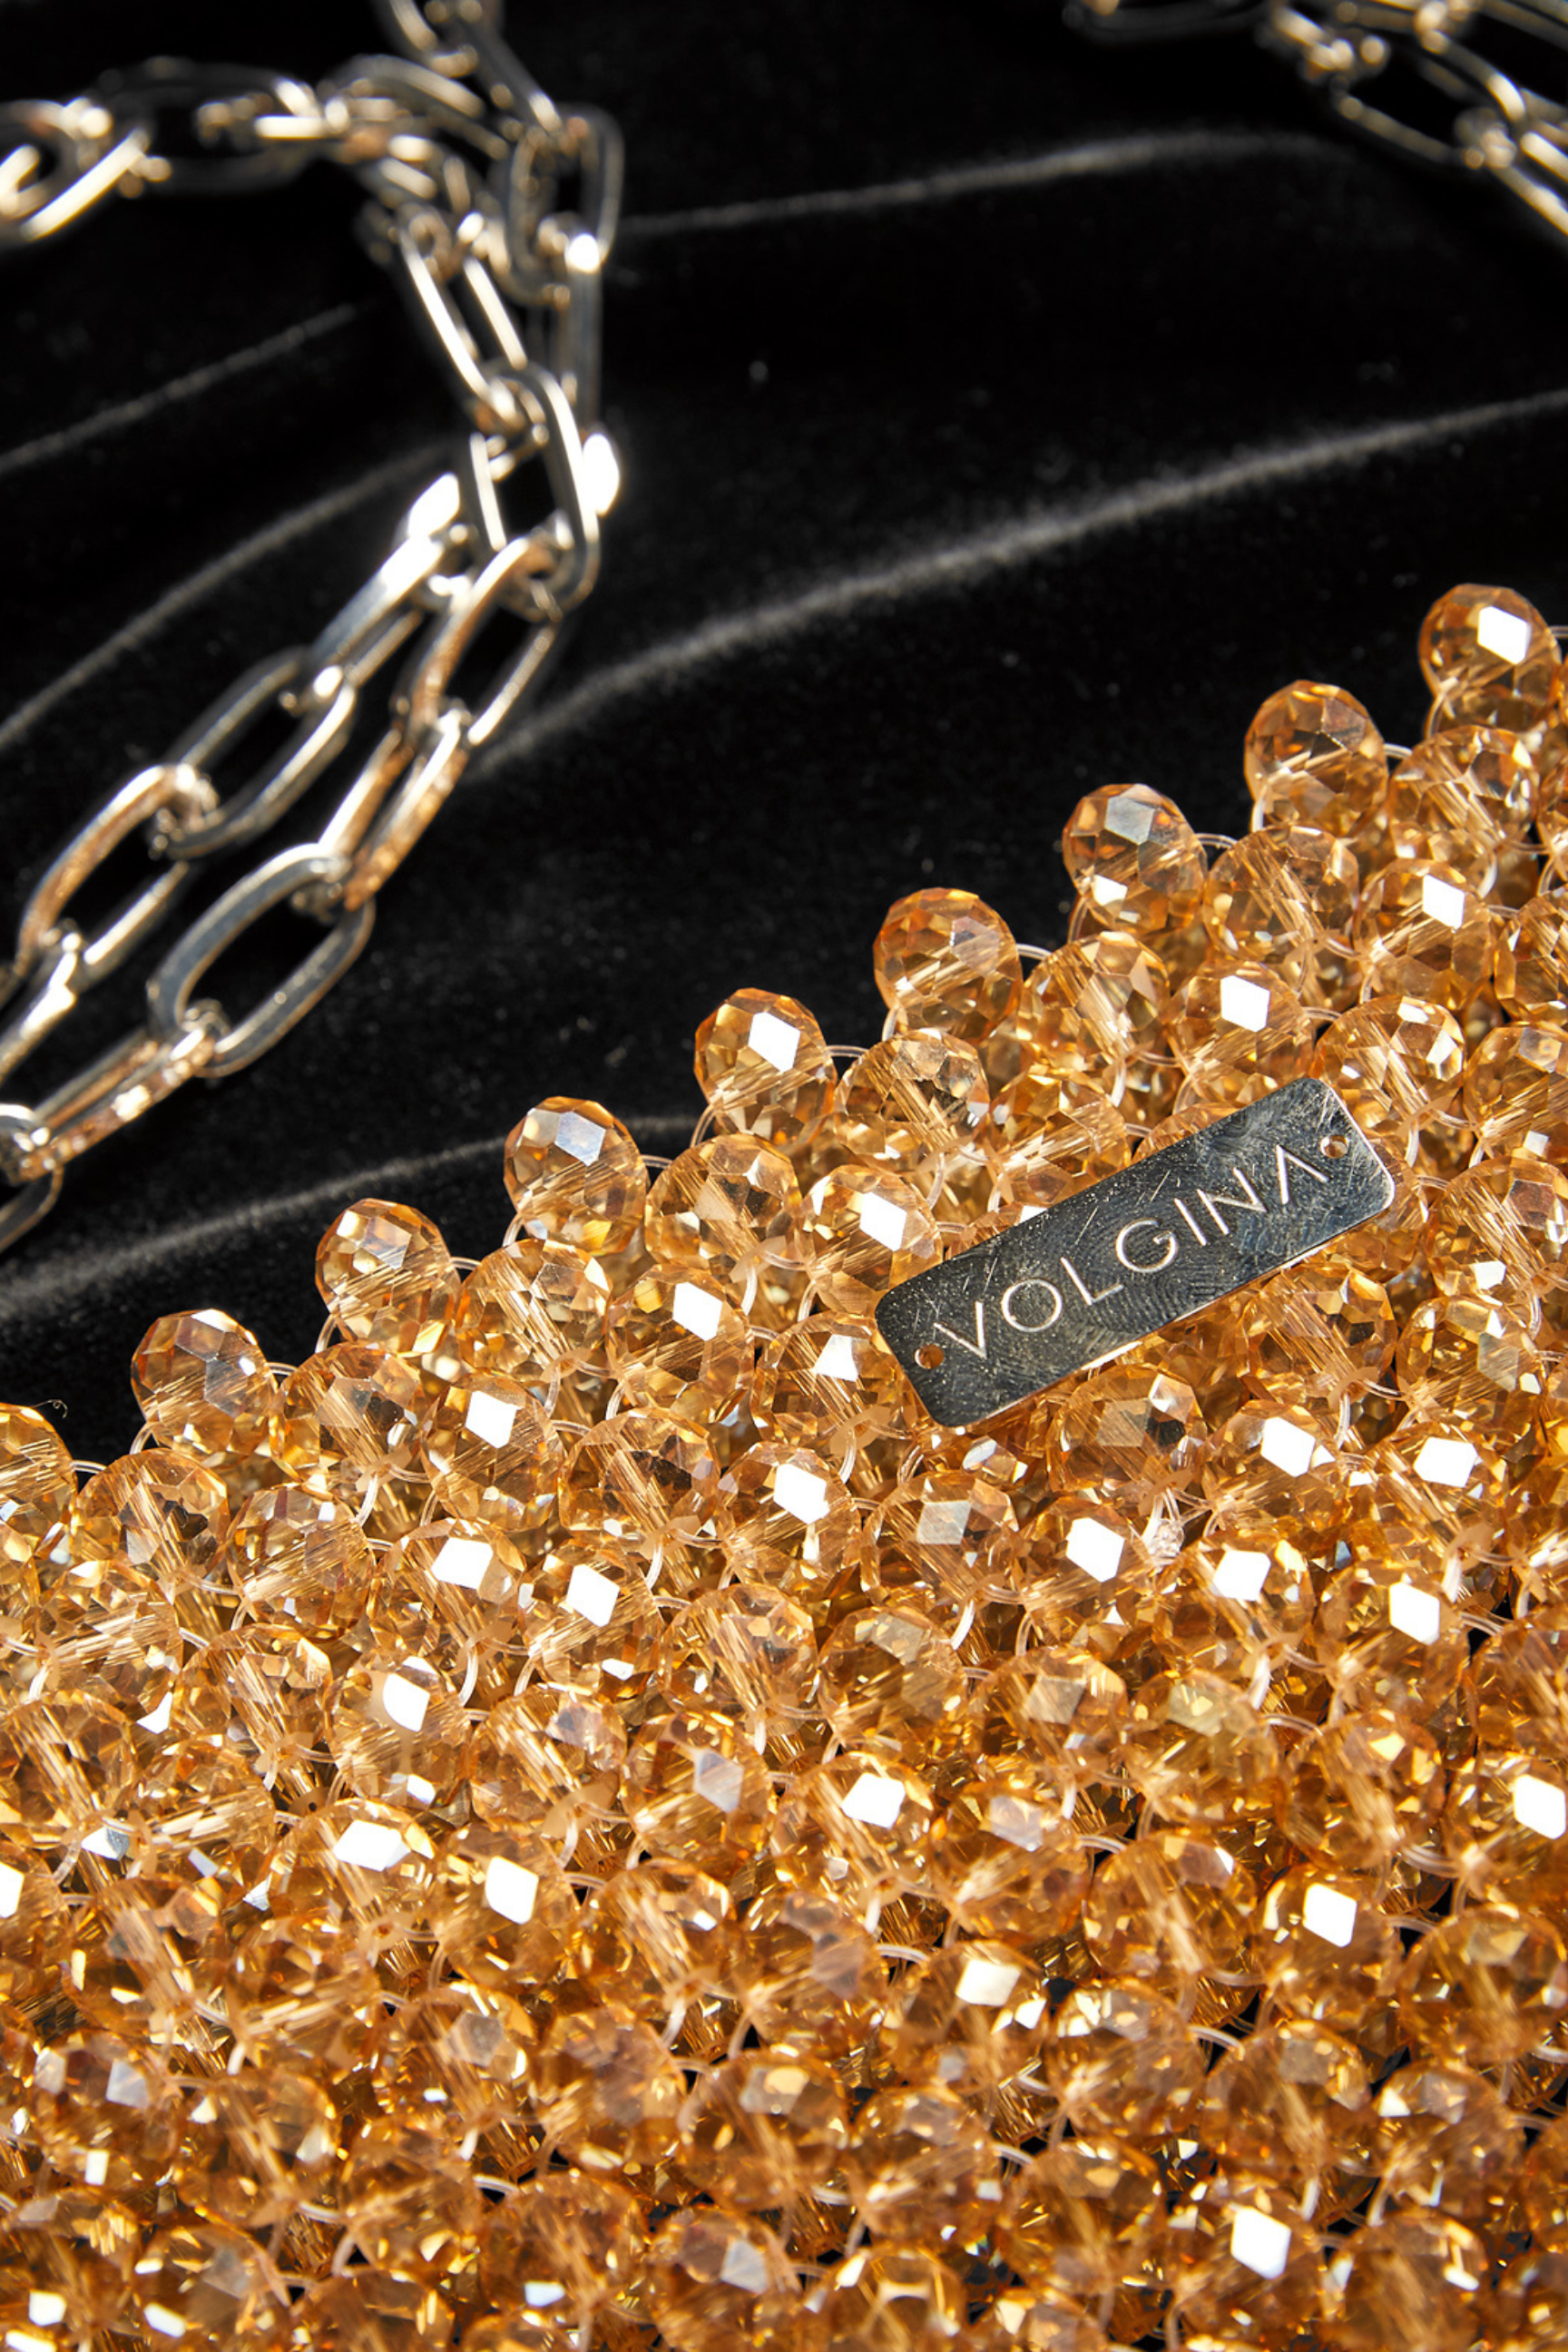 Honey Handbag with Swarovski Crystal Beads, Handmade